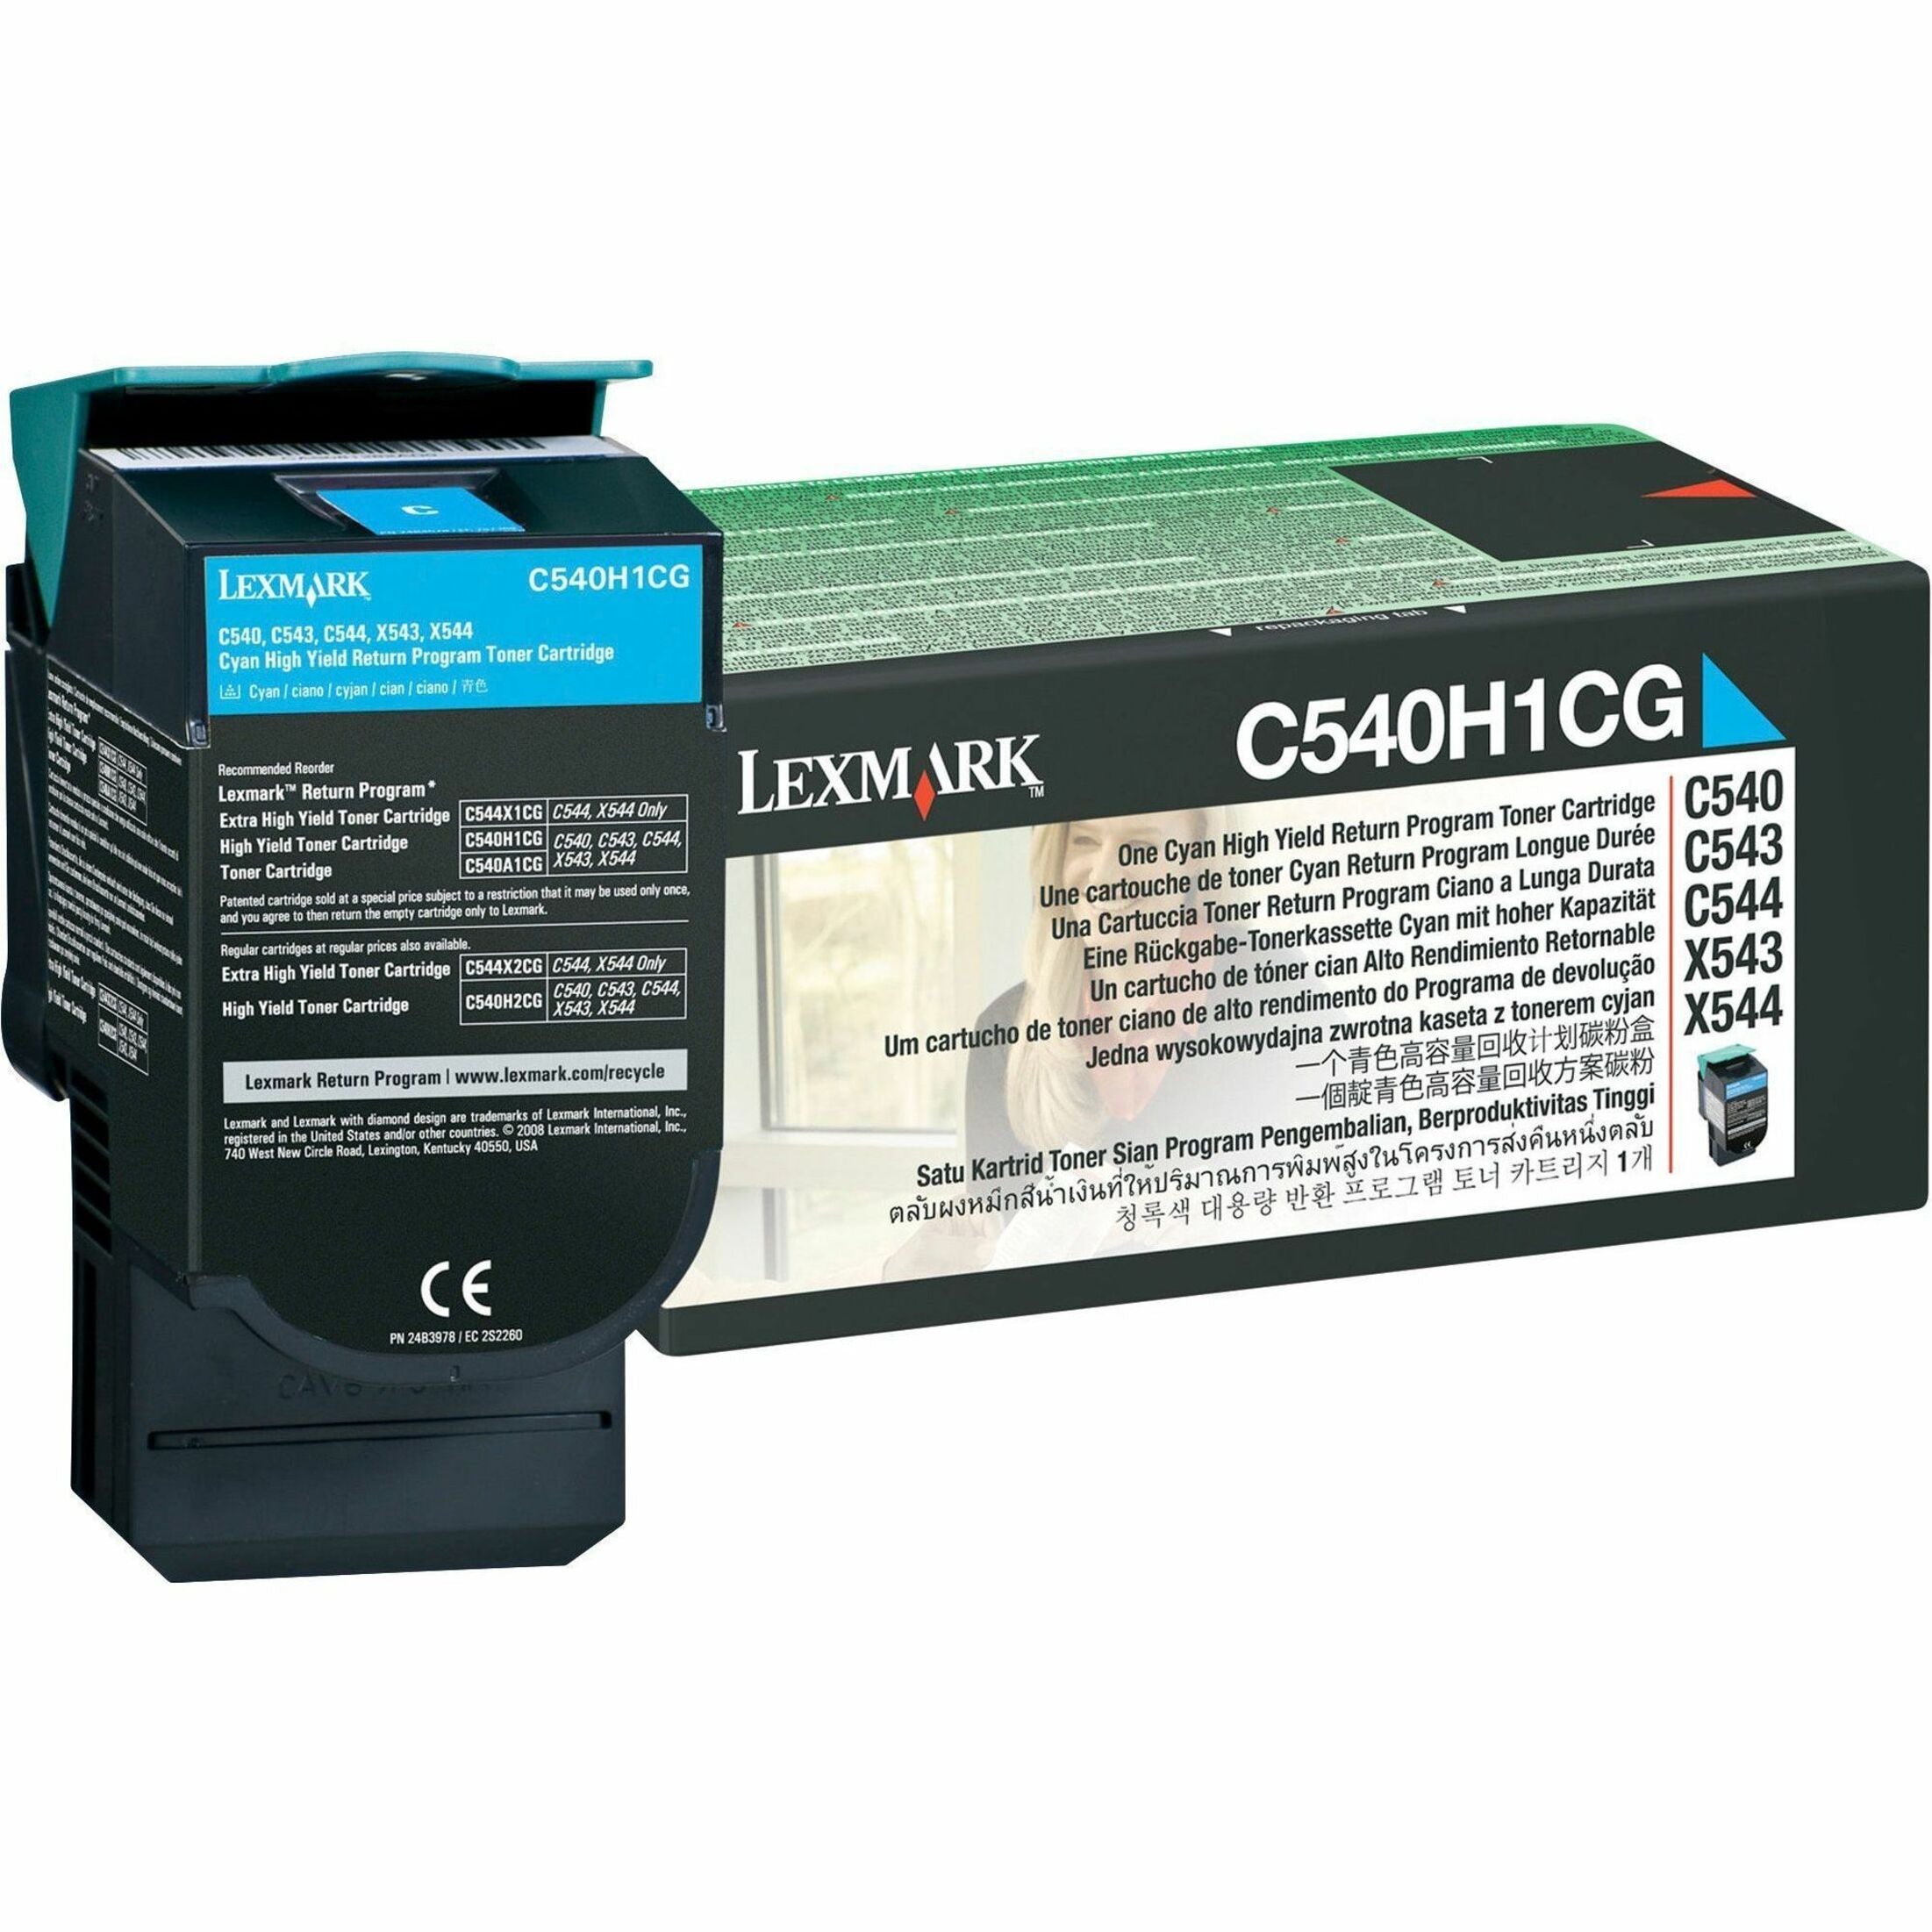 Lexmark C540H1CG Print Cartridge, Cyan - 2000 Page Yield